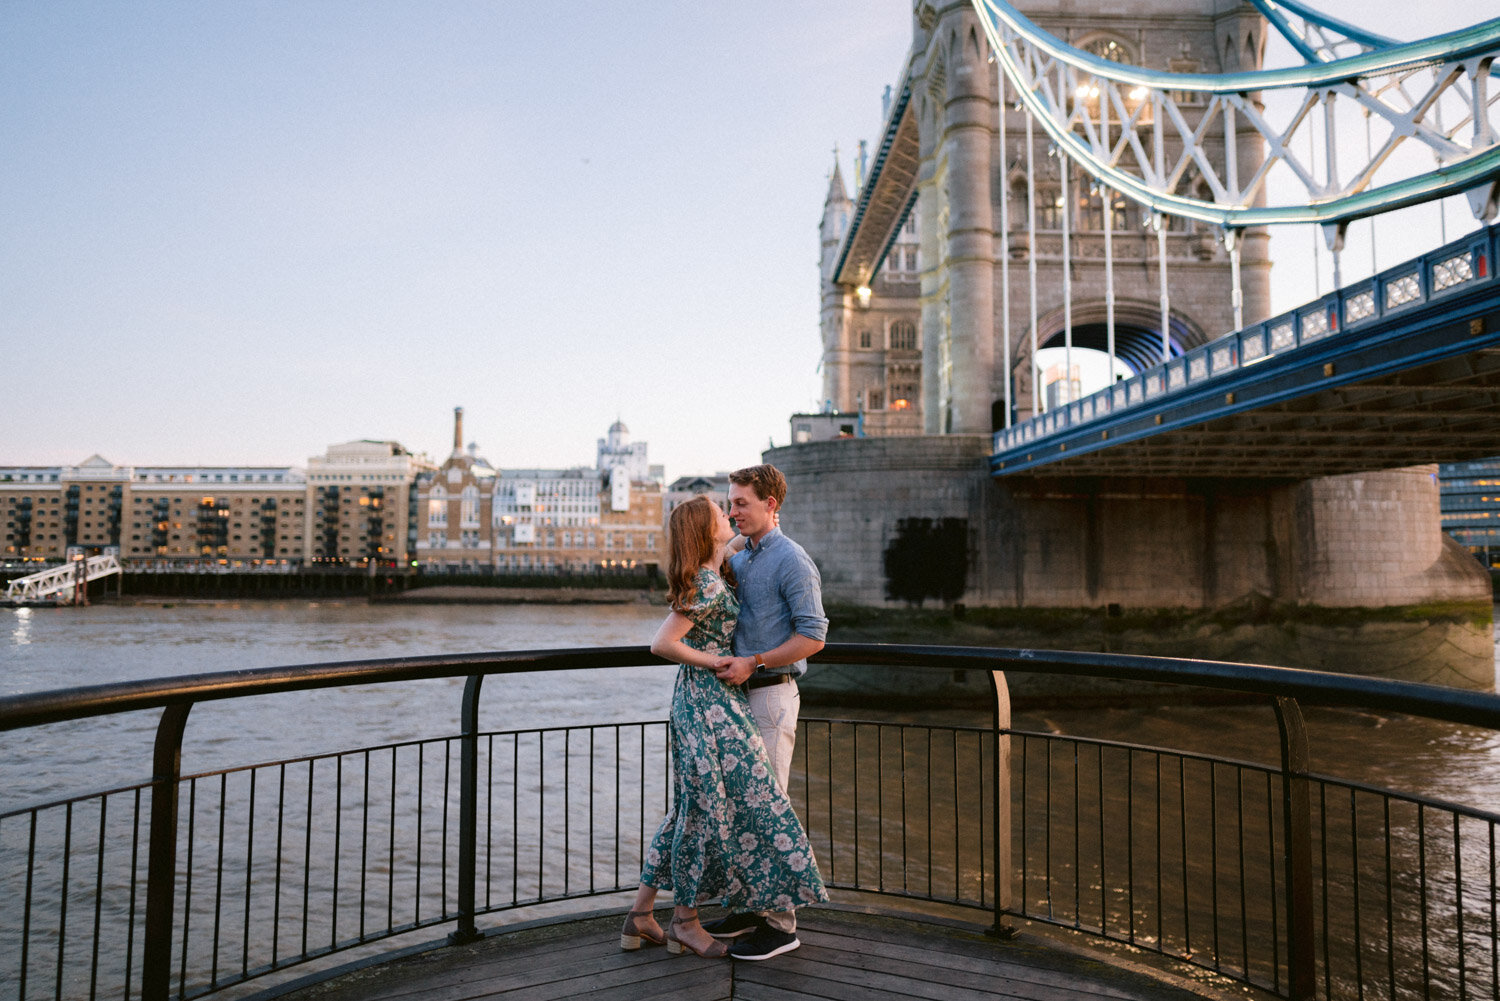 Engagement photoshoot at Tower Bridge, London